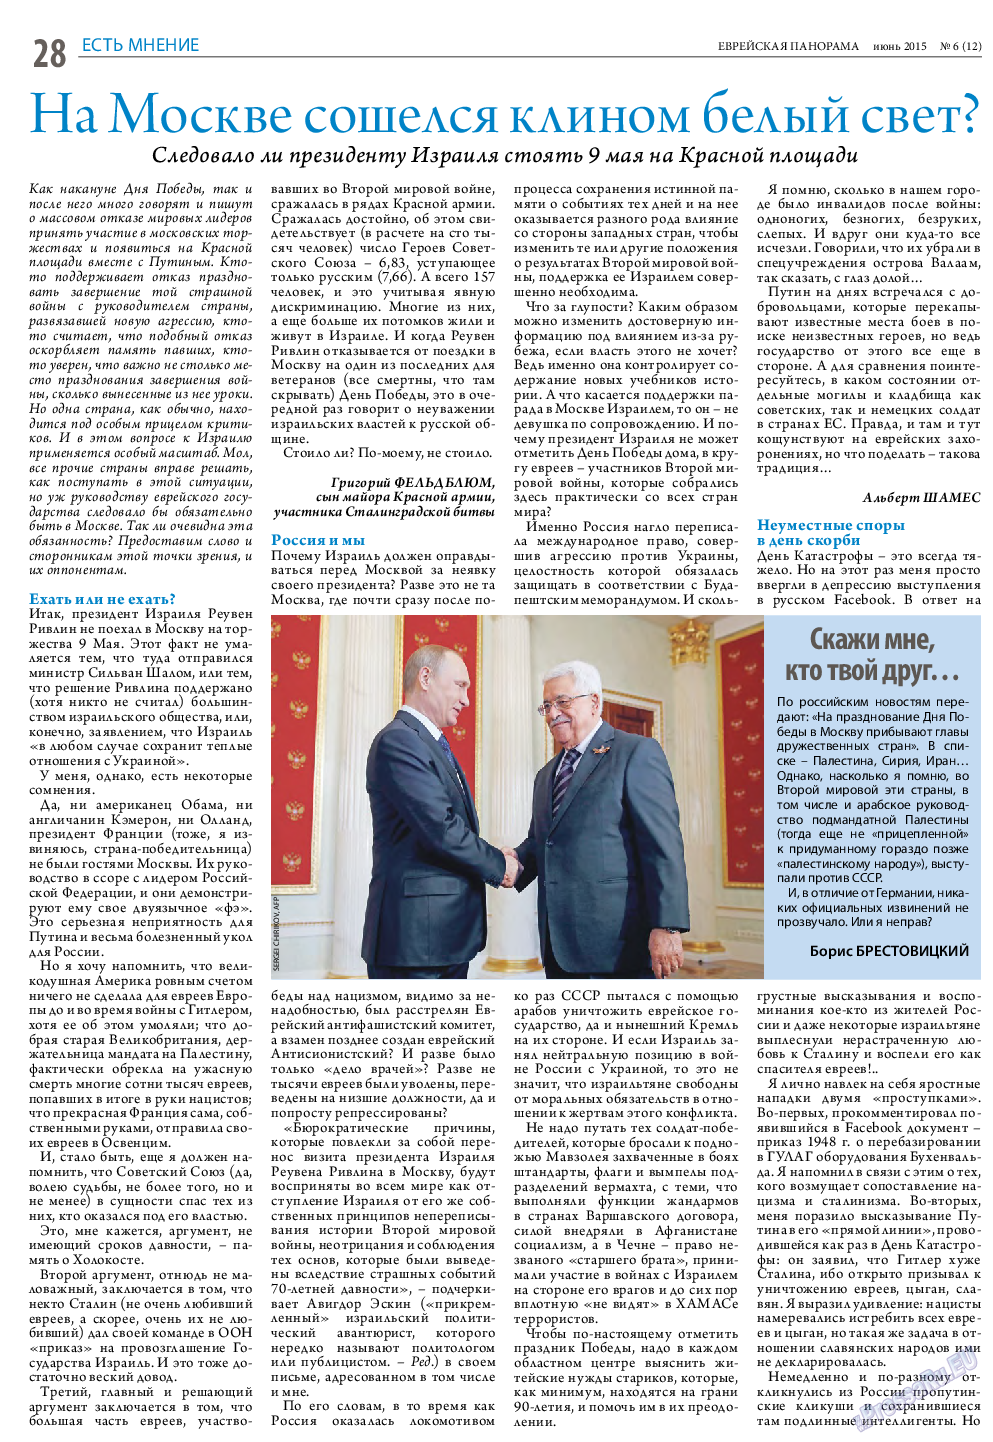 Еврейская панорама, газета. 2015 №6 стр.28